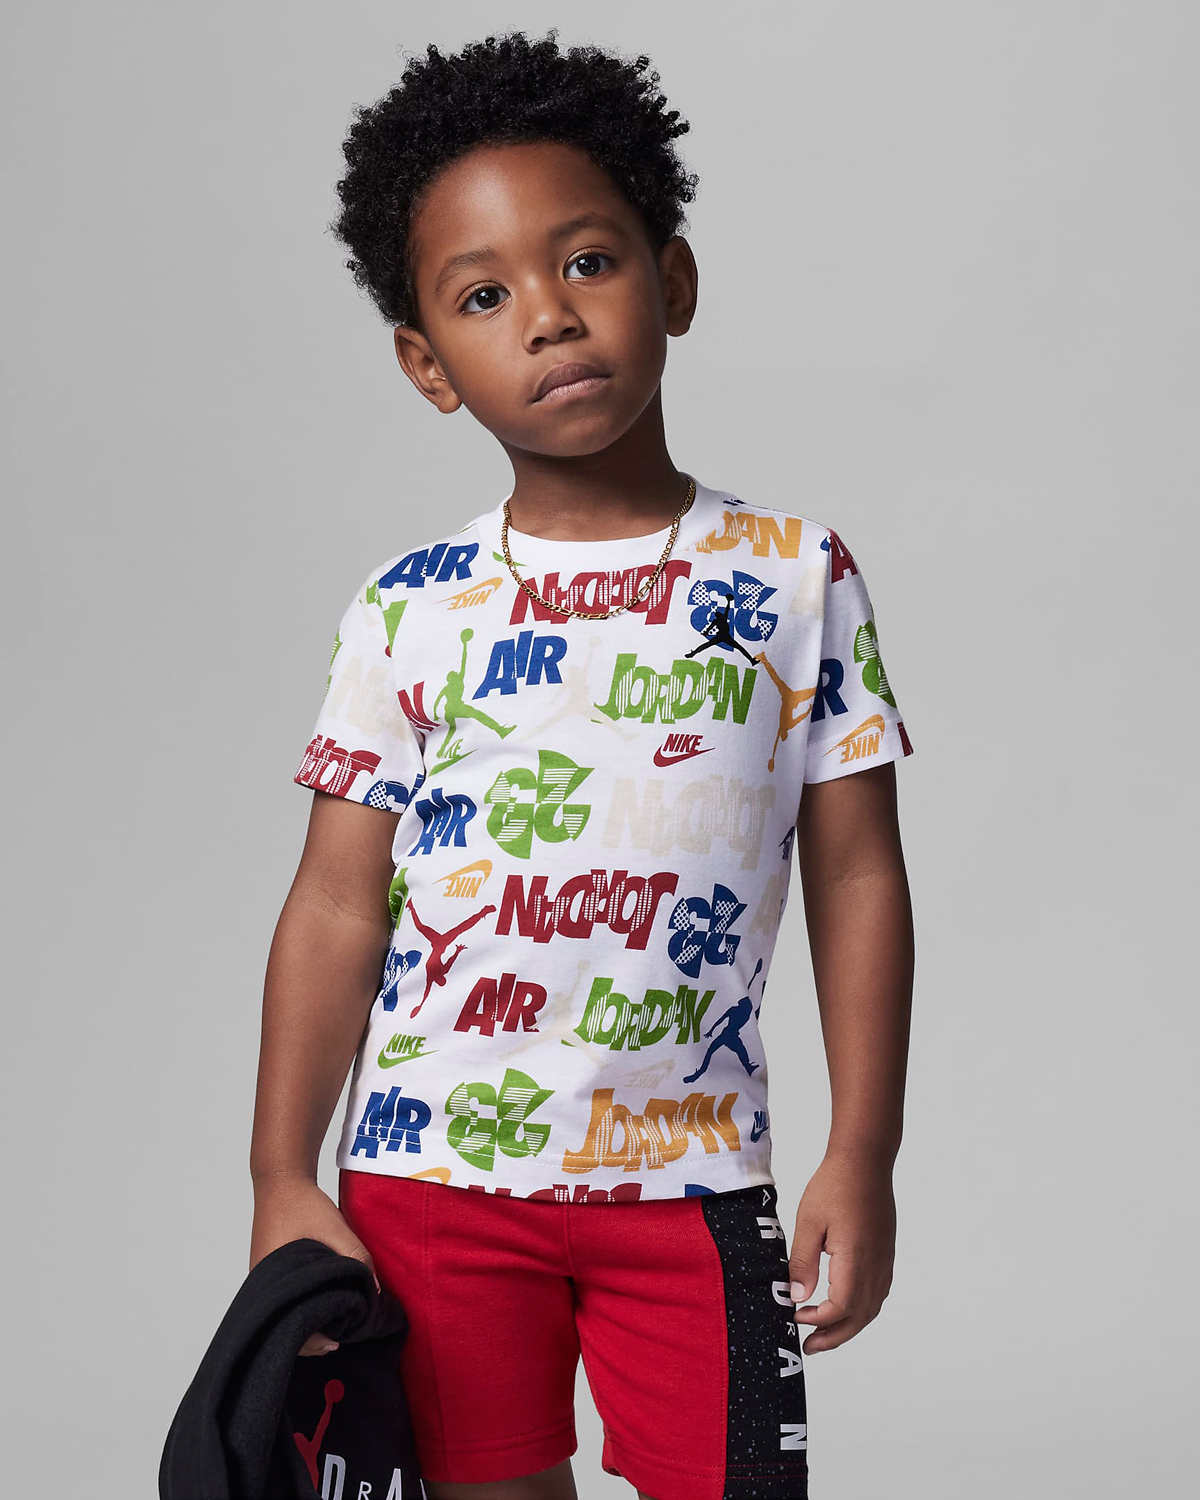 Air Jordan 4 Messy Room Grade School Kids Shirts and Outfits